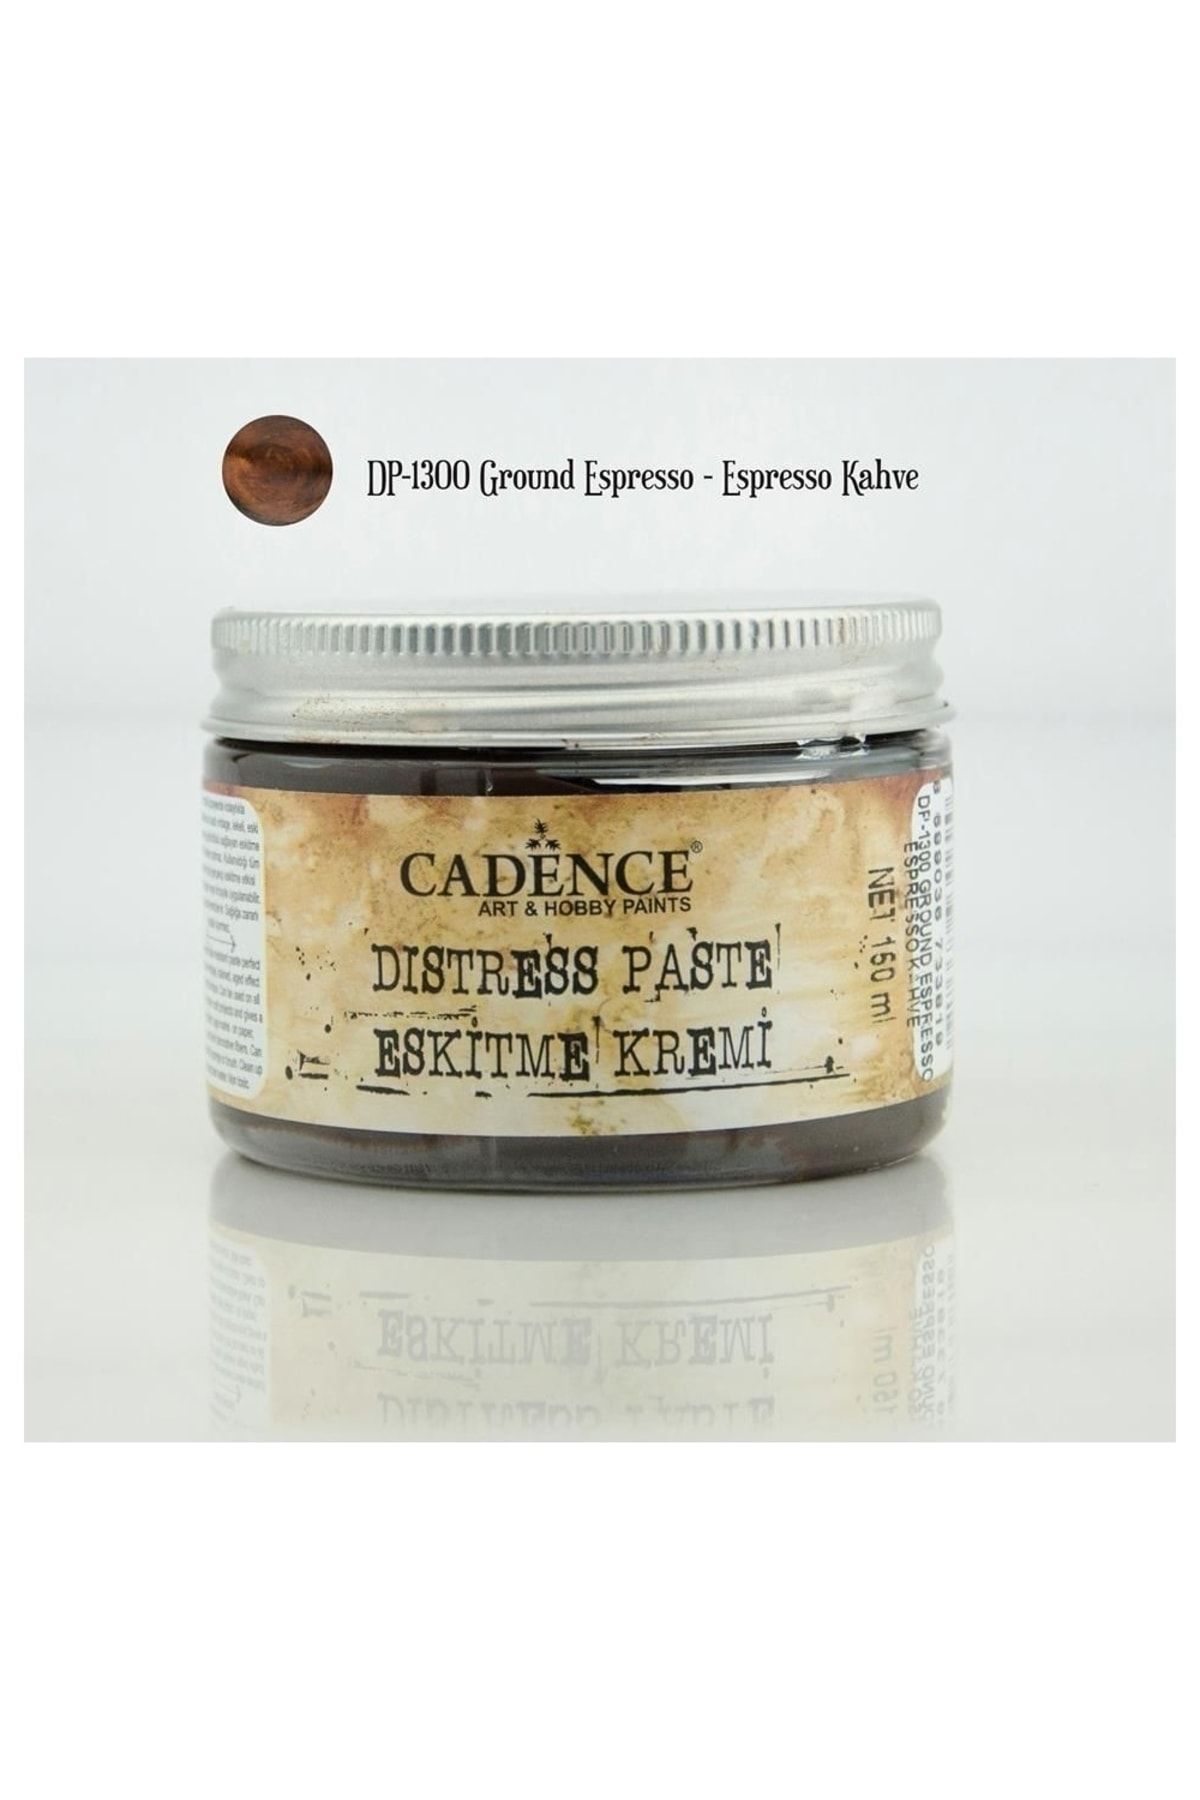 Cadence Distress Paste - Eskitme Kremi 150ml Dp 1300 Espresso Kahve